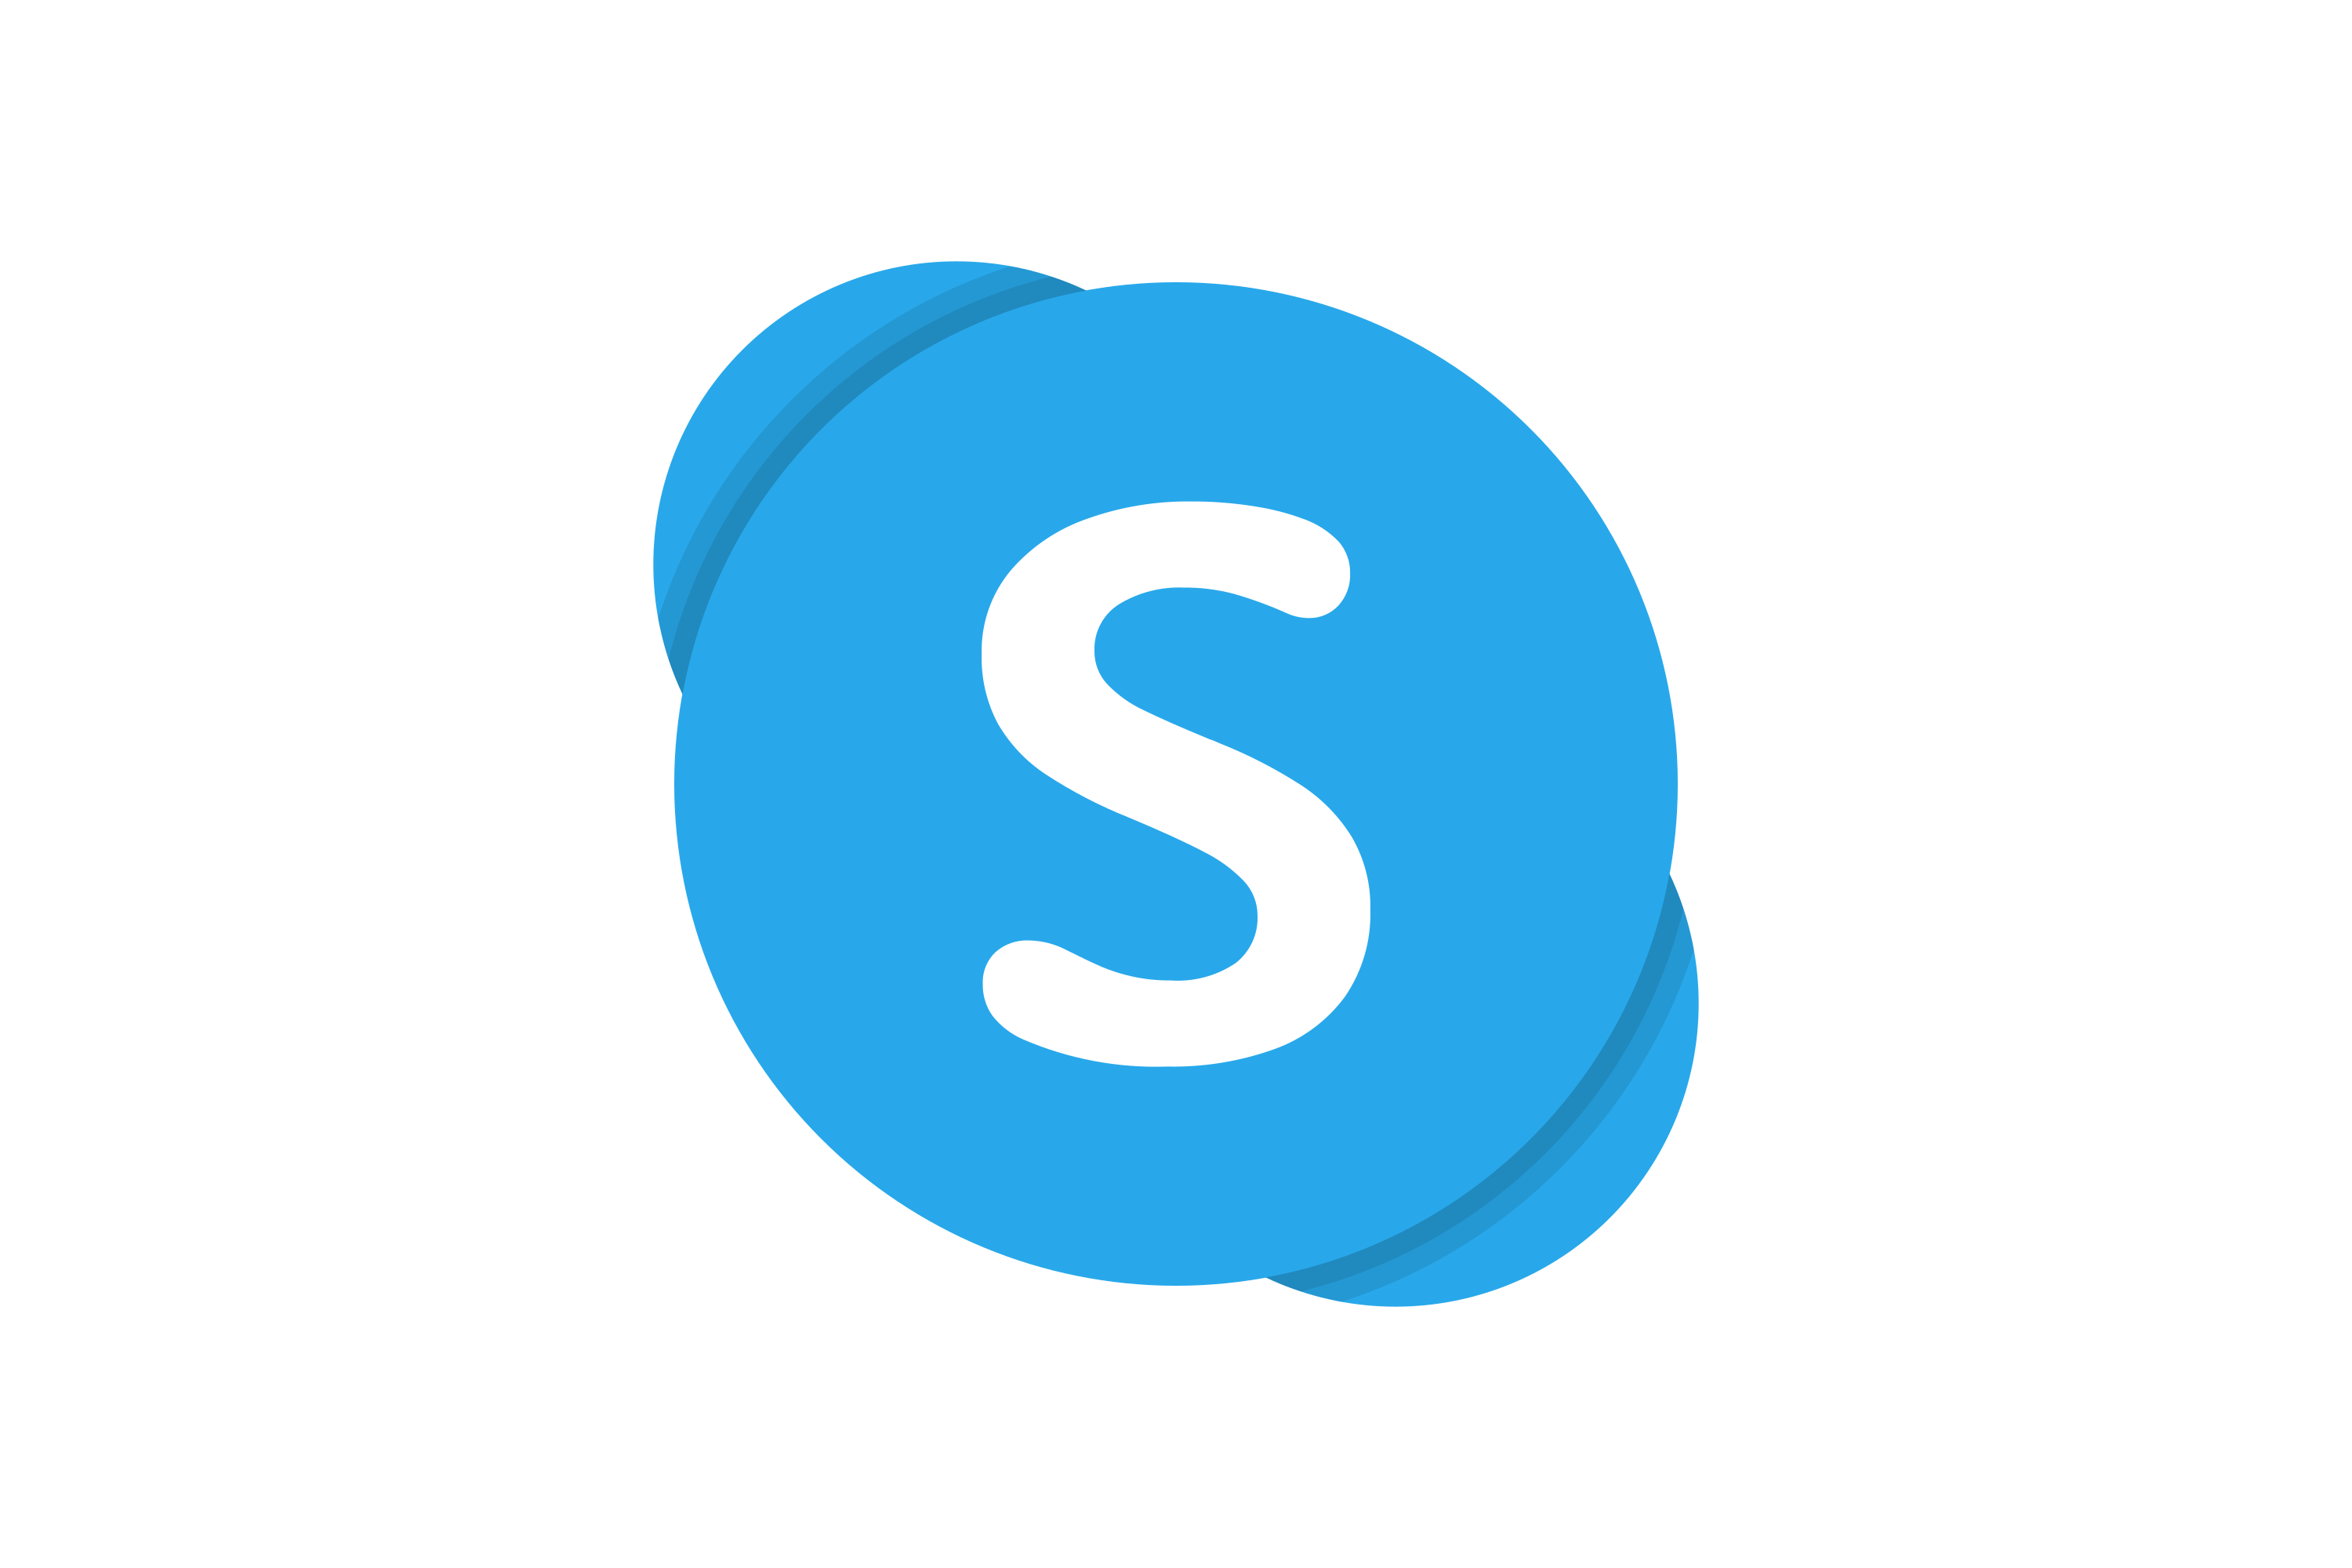 skype logo image